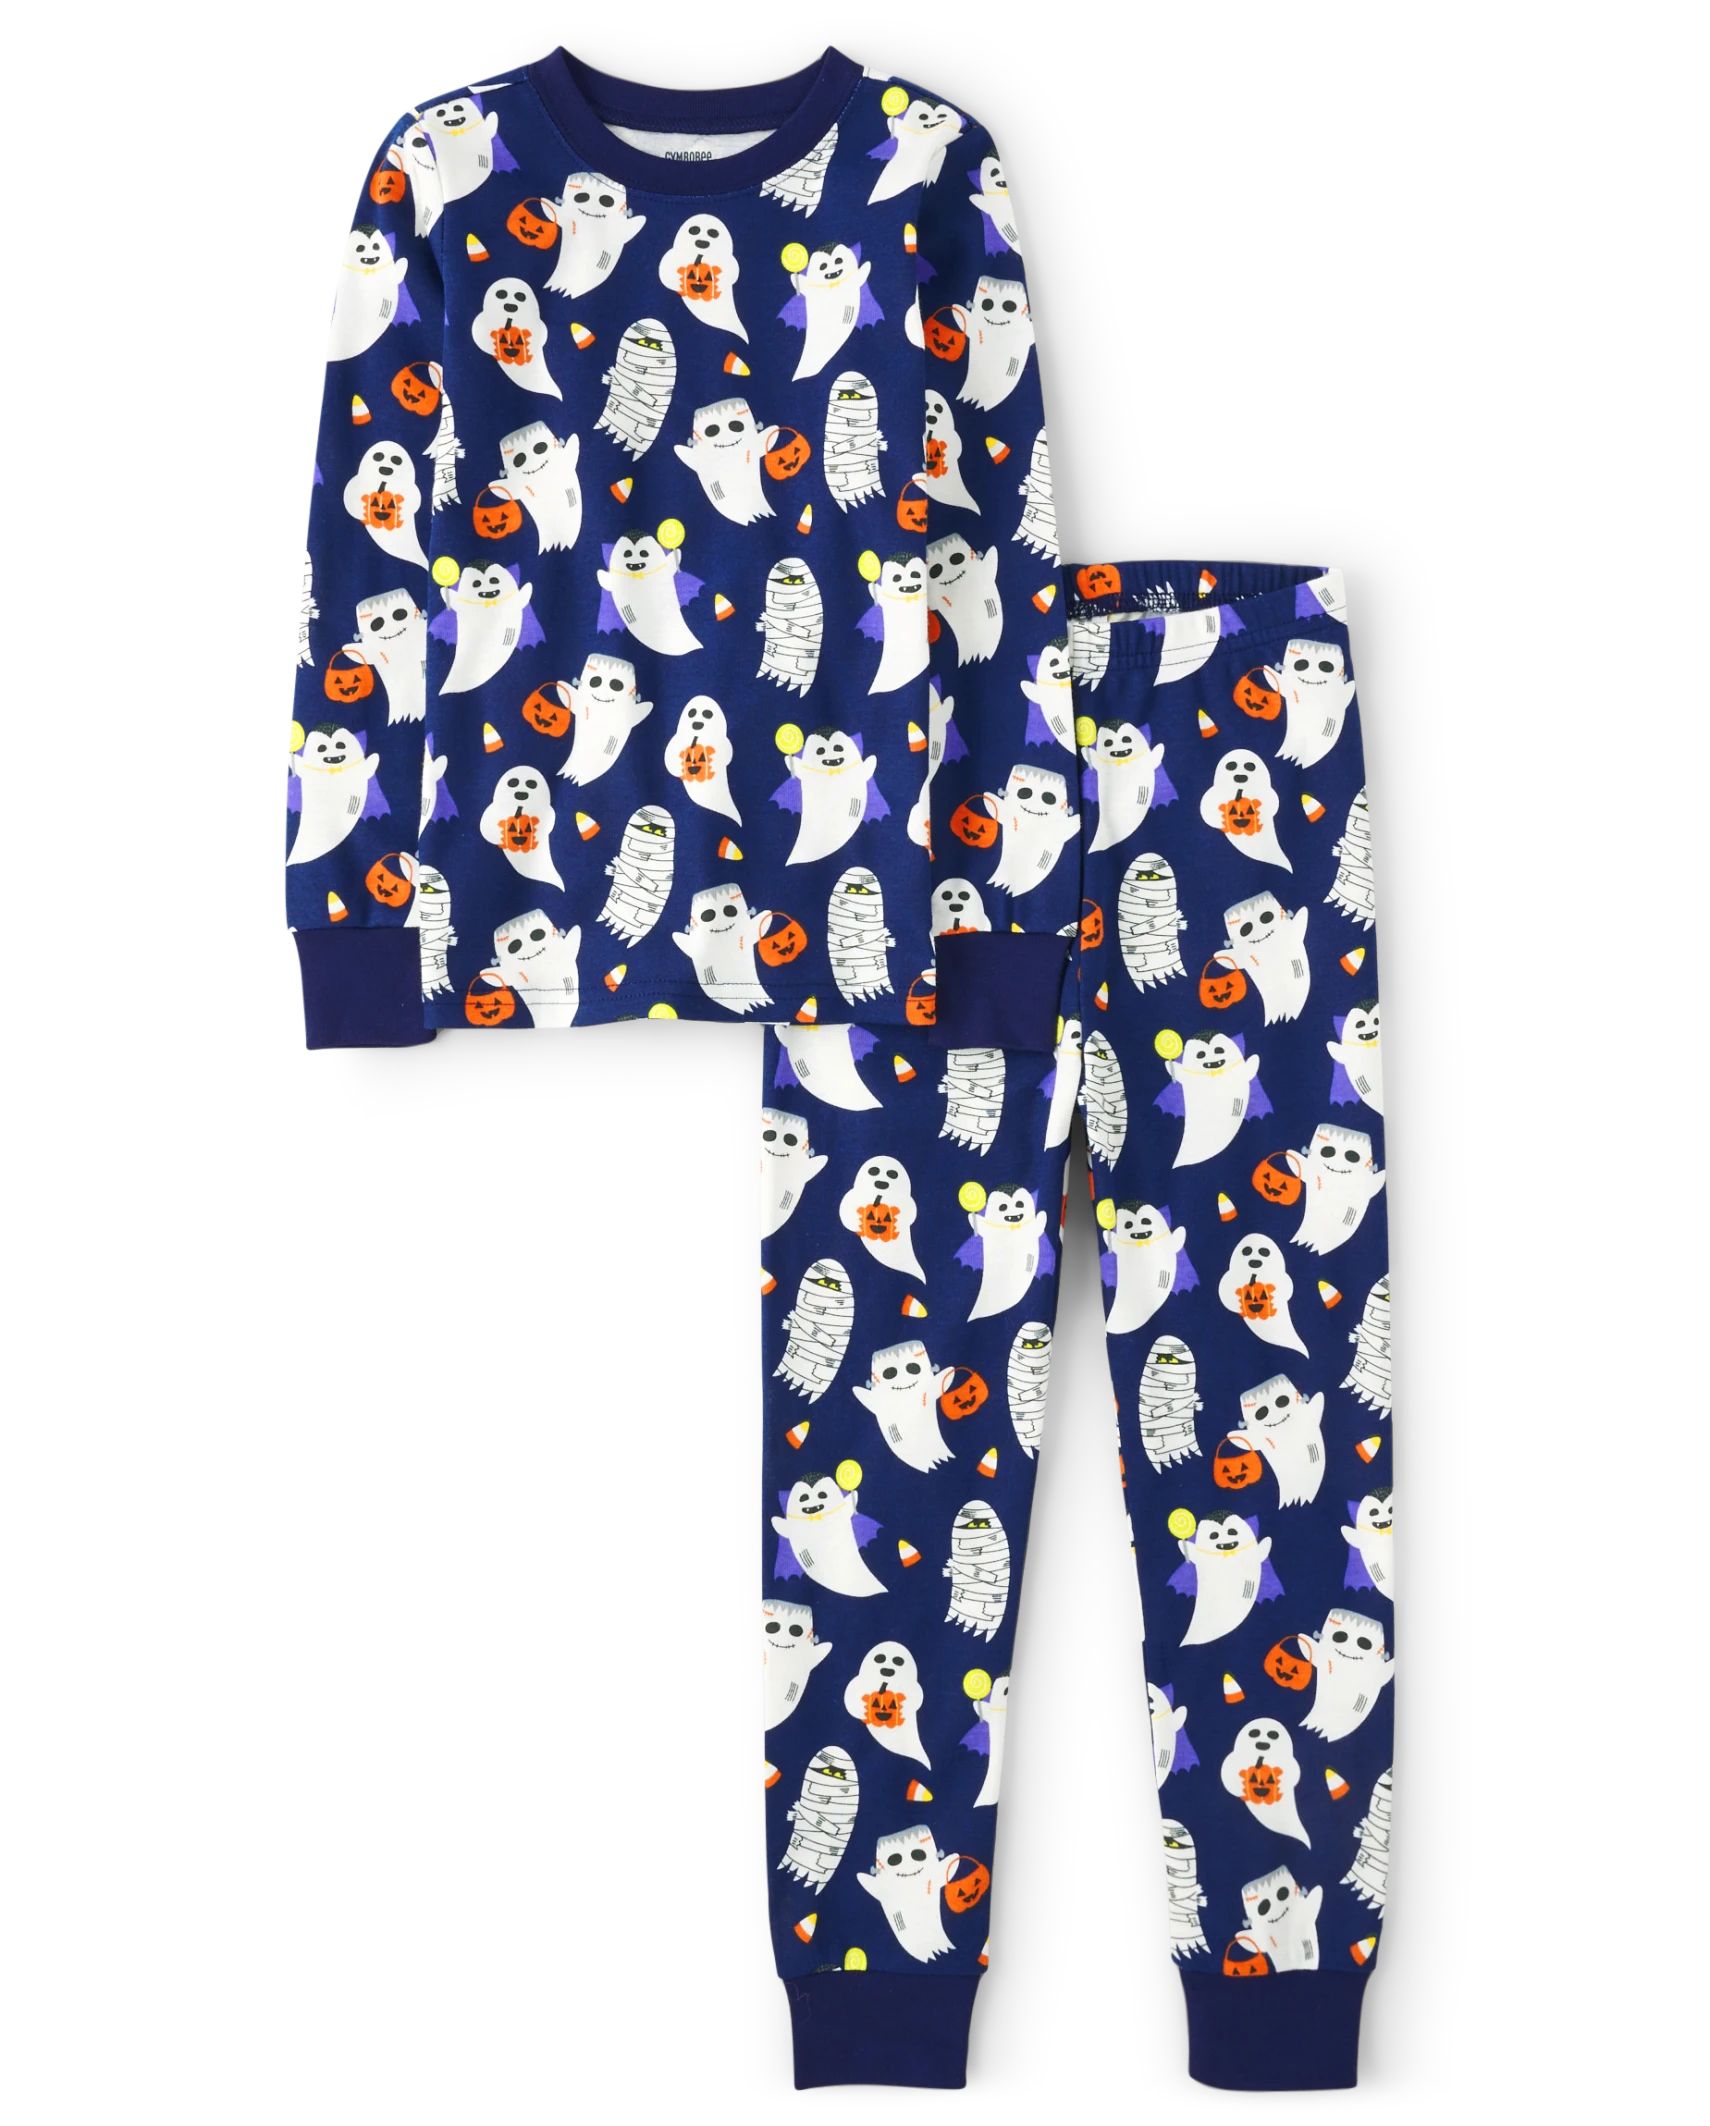 Boys Ghost Snug Fit Cotton Pajamas - Gymmies - multi clr | The Children's Place